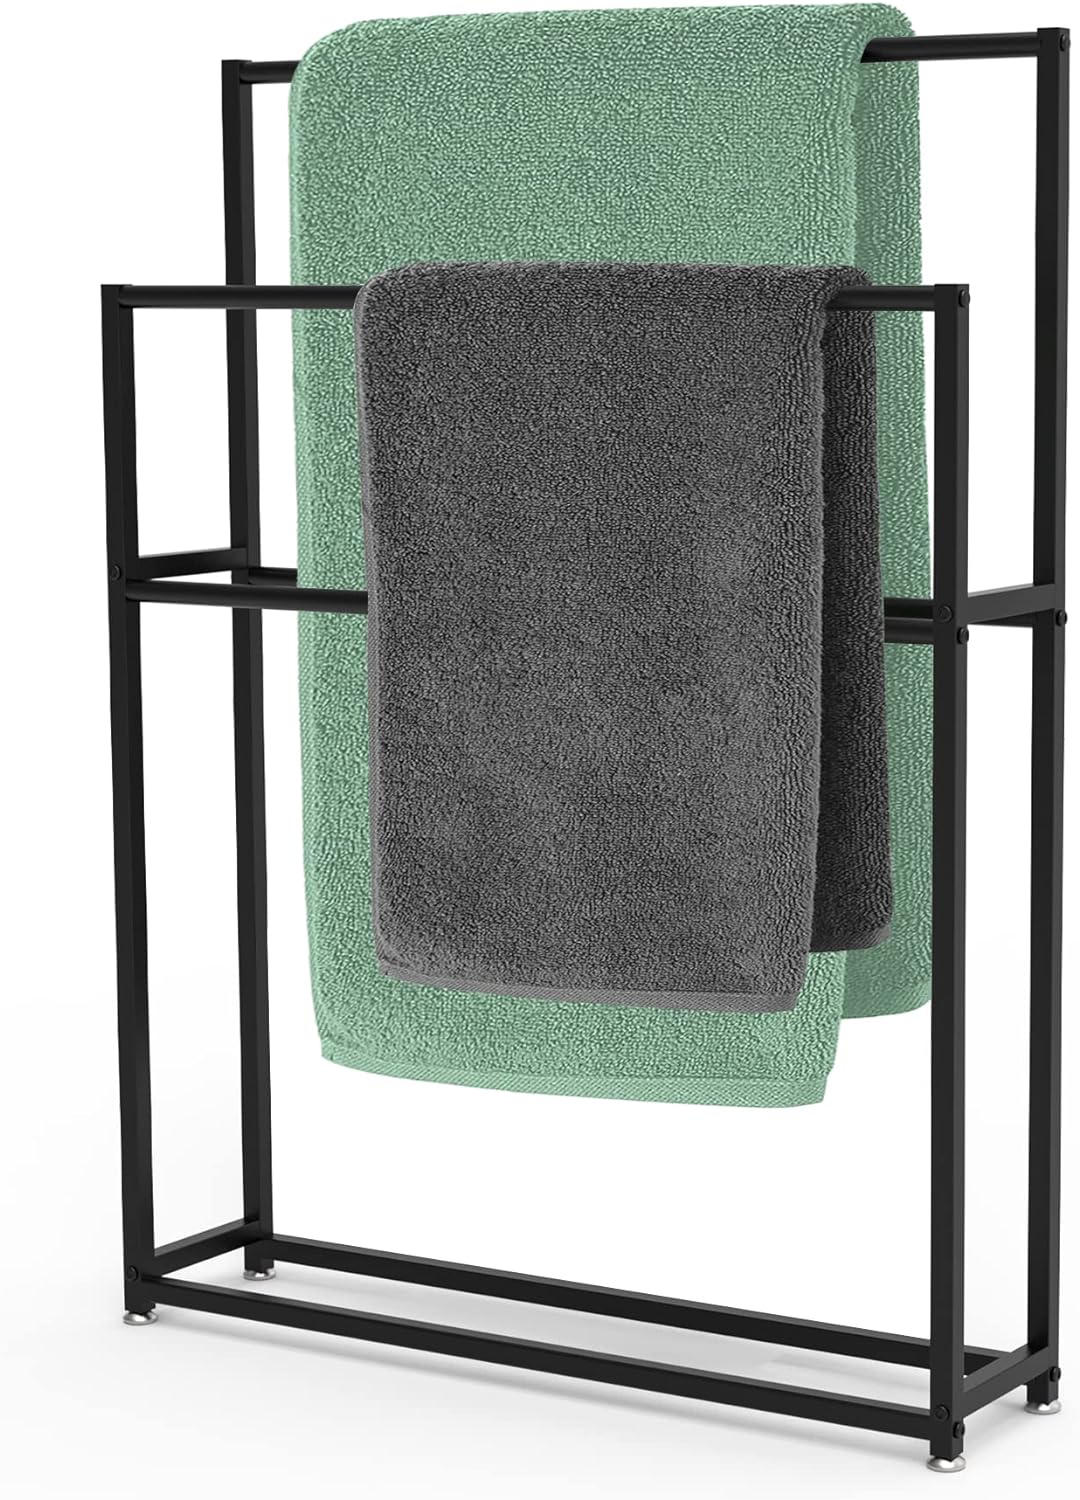 43" Tall Free Standing Towel Rack